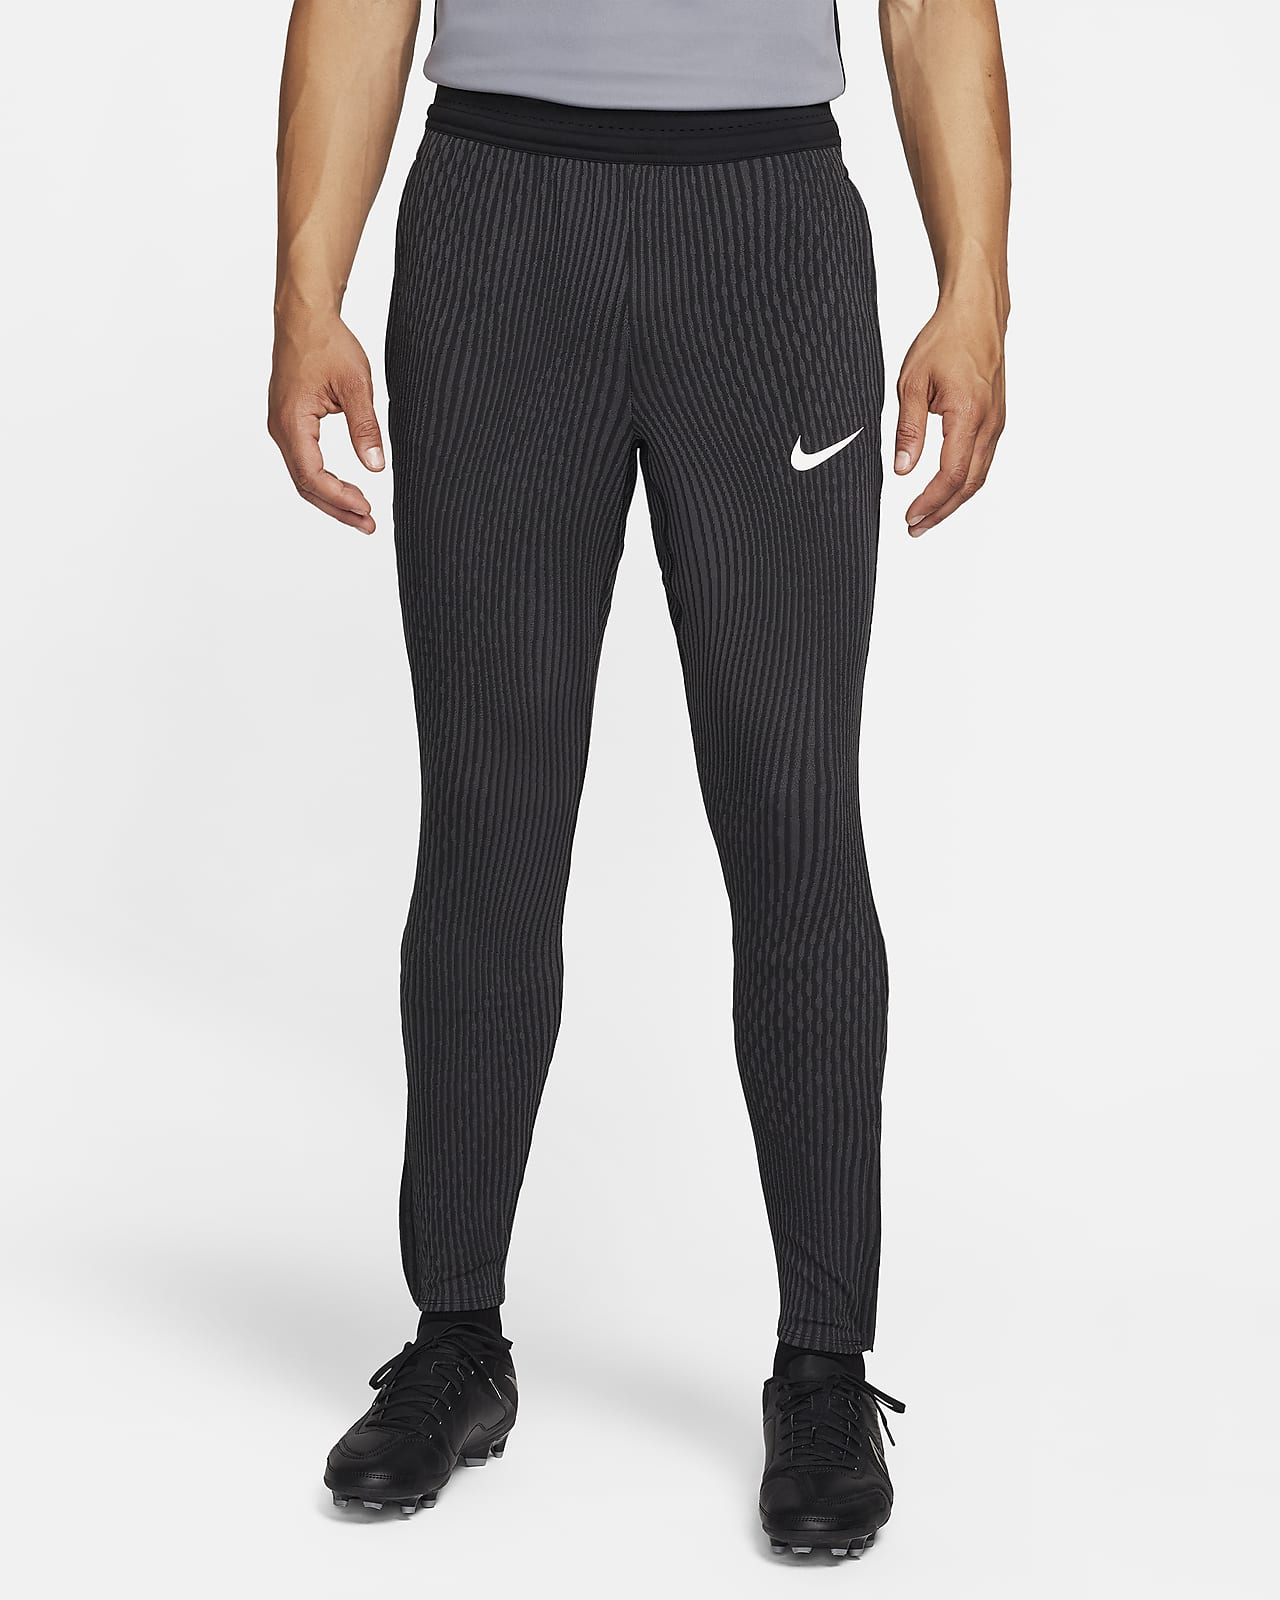 Nike Strike Elite Men's Dri-FIT ADV Soccer Pants.